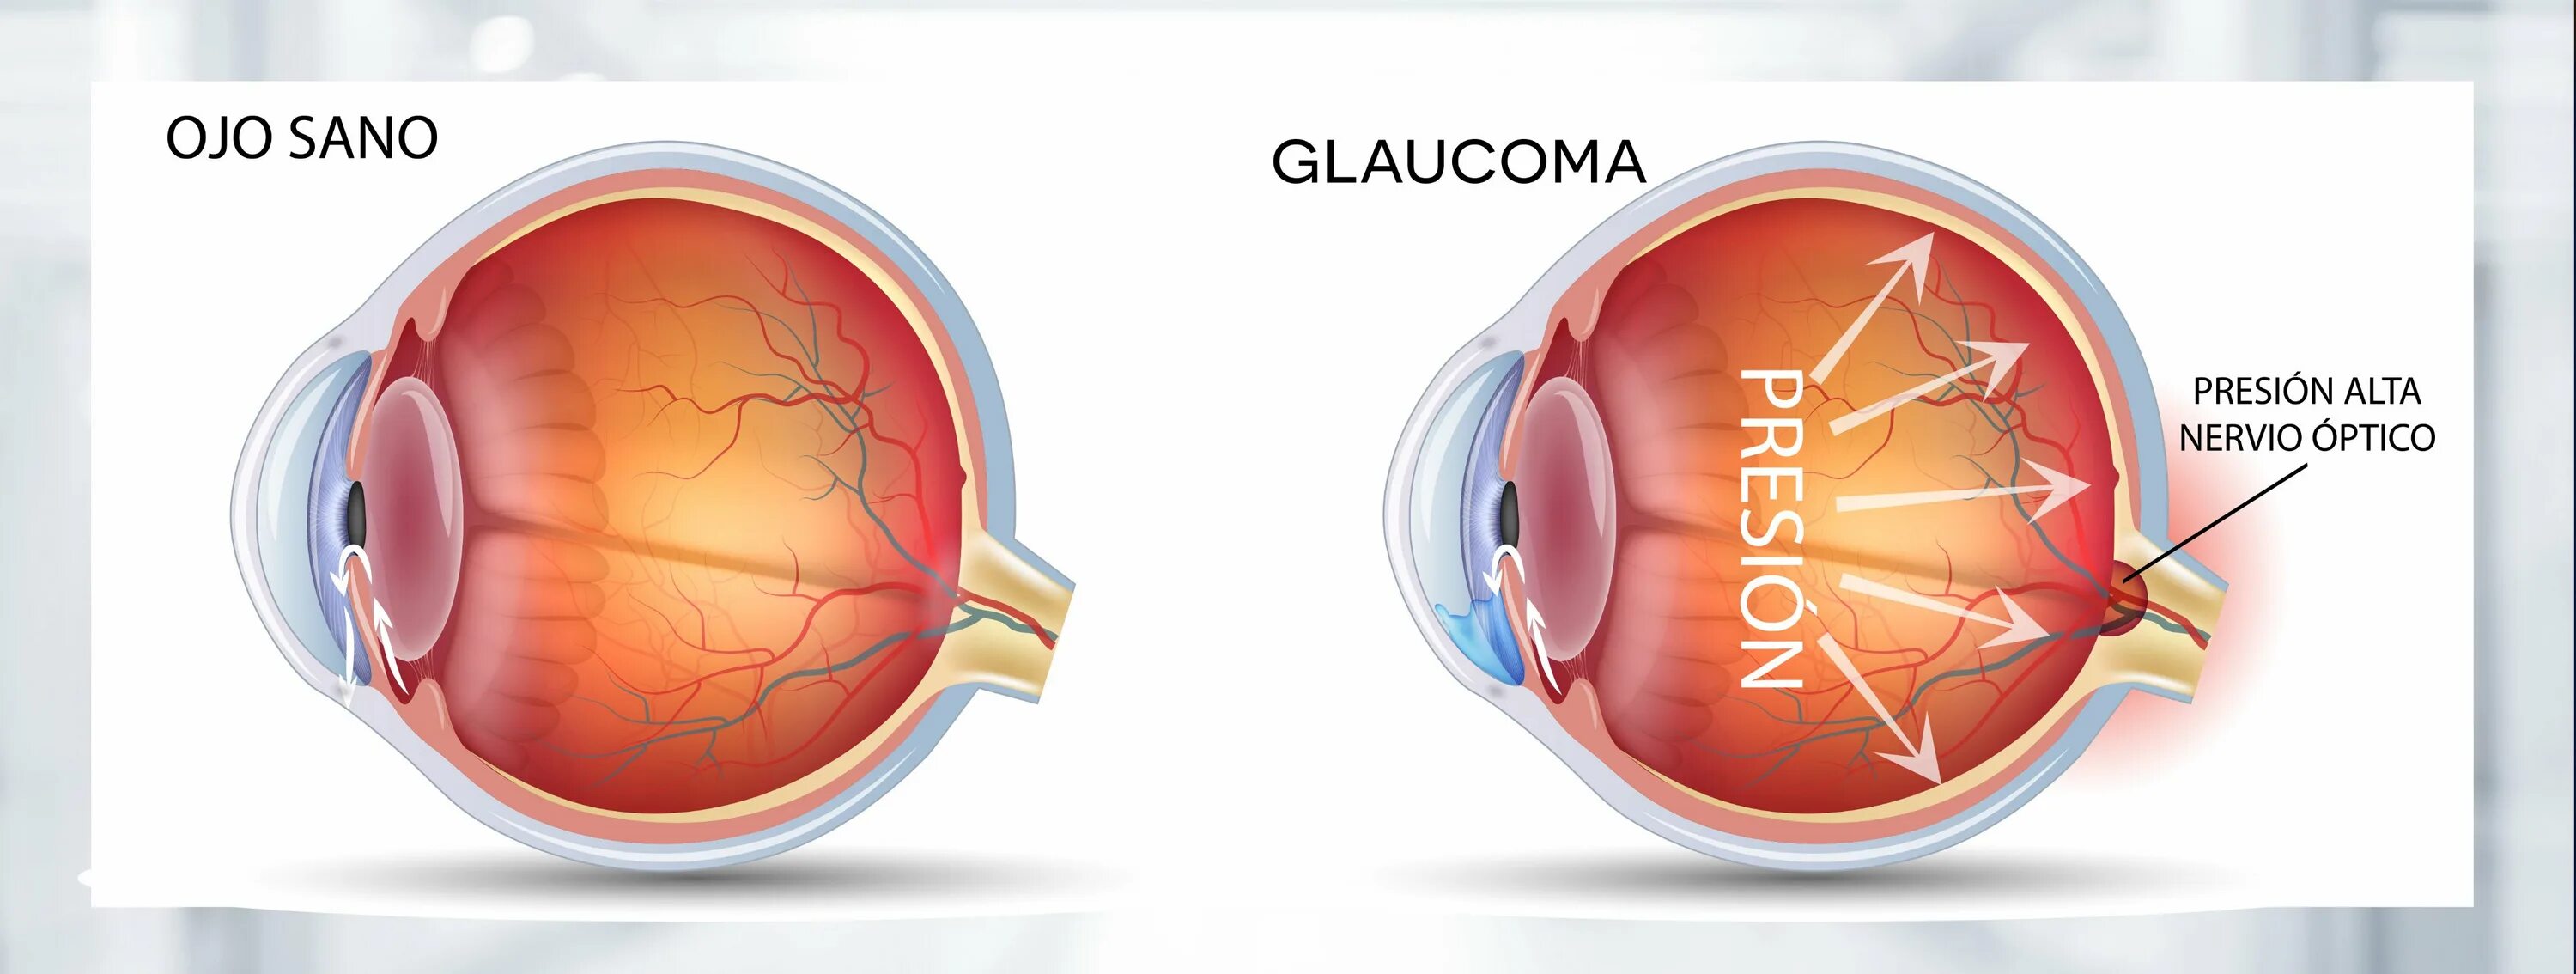 Терминальная глаукома. Причины глаукомы глаза